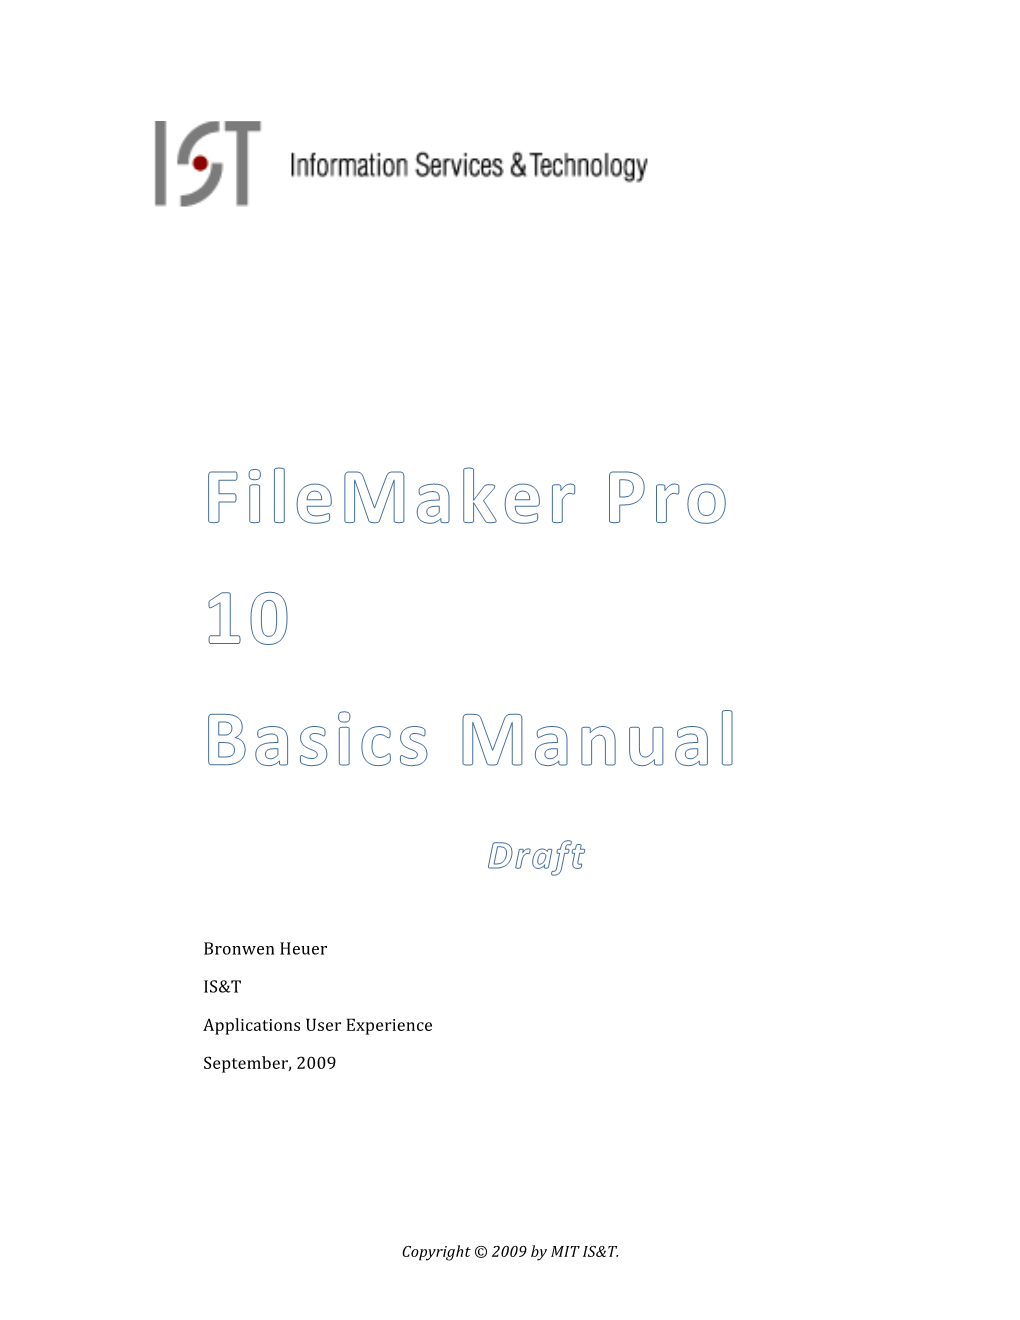 Filemaker Pro 10 Basics Manual